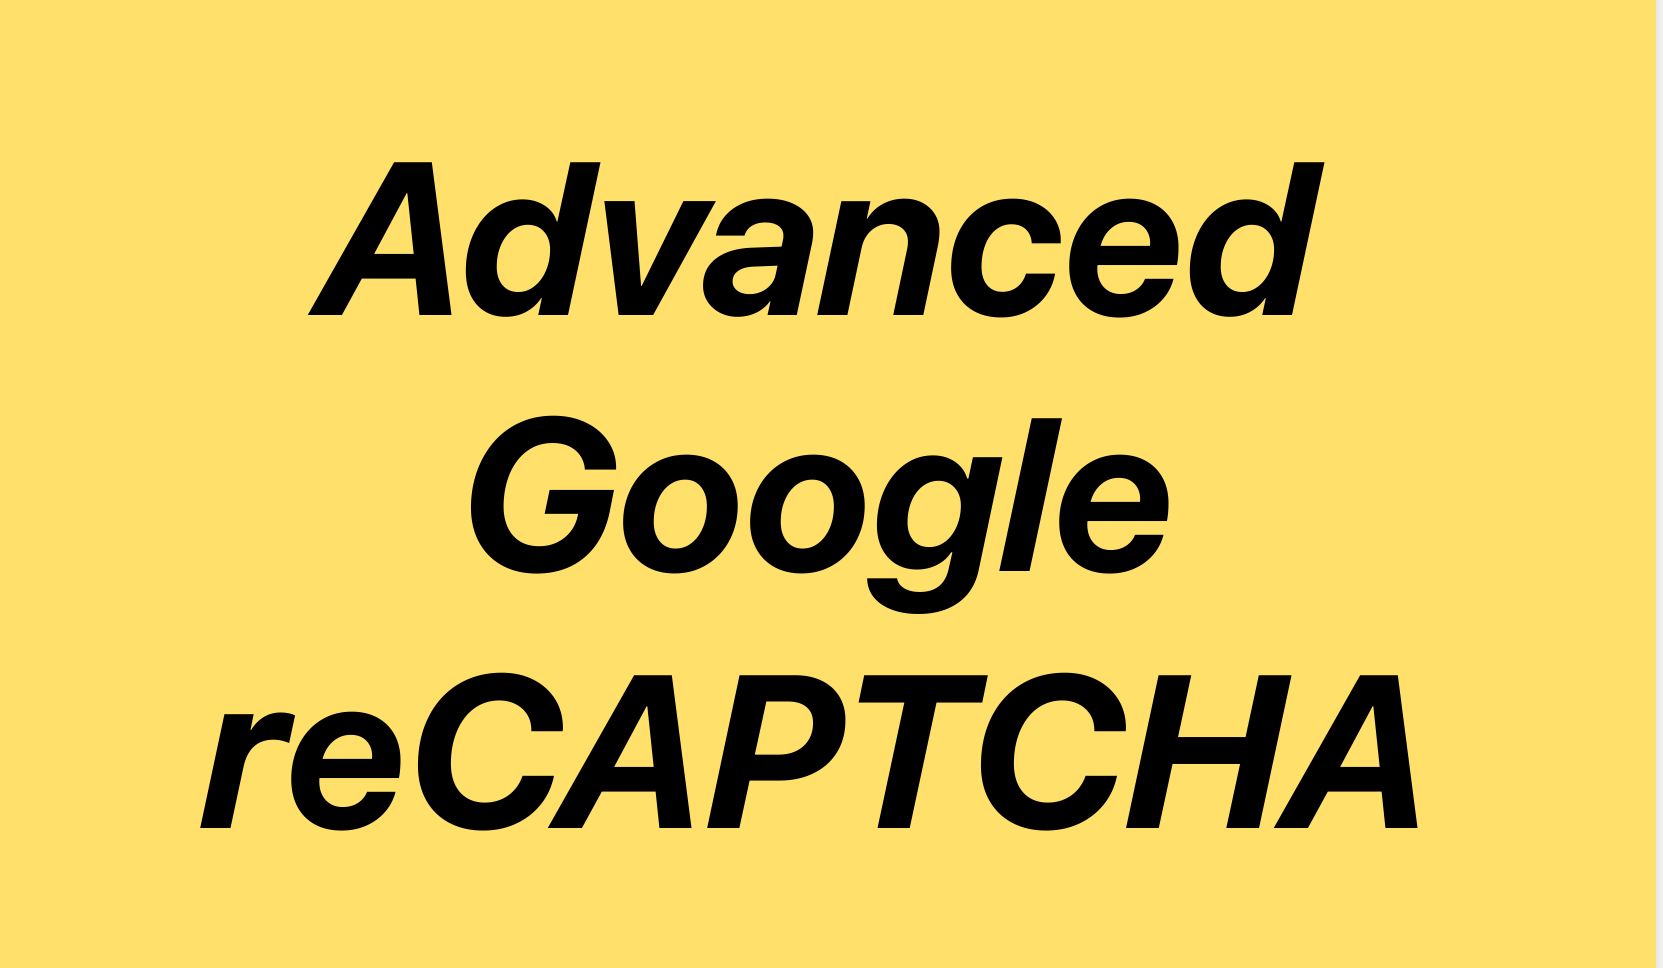 Advanced Google Recaptcha Featured image